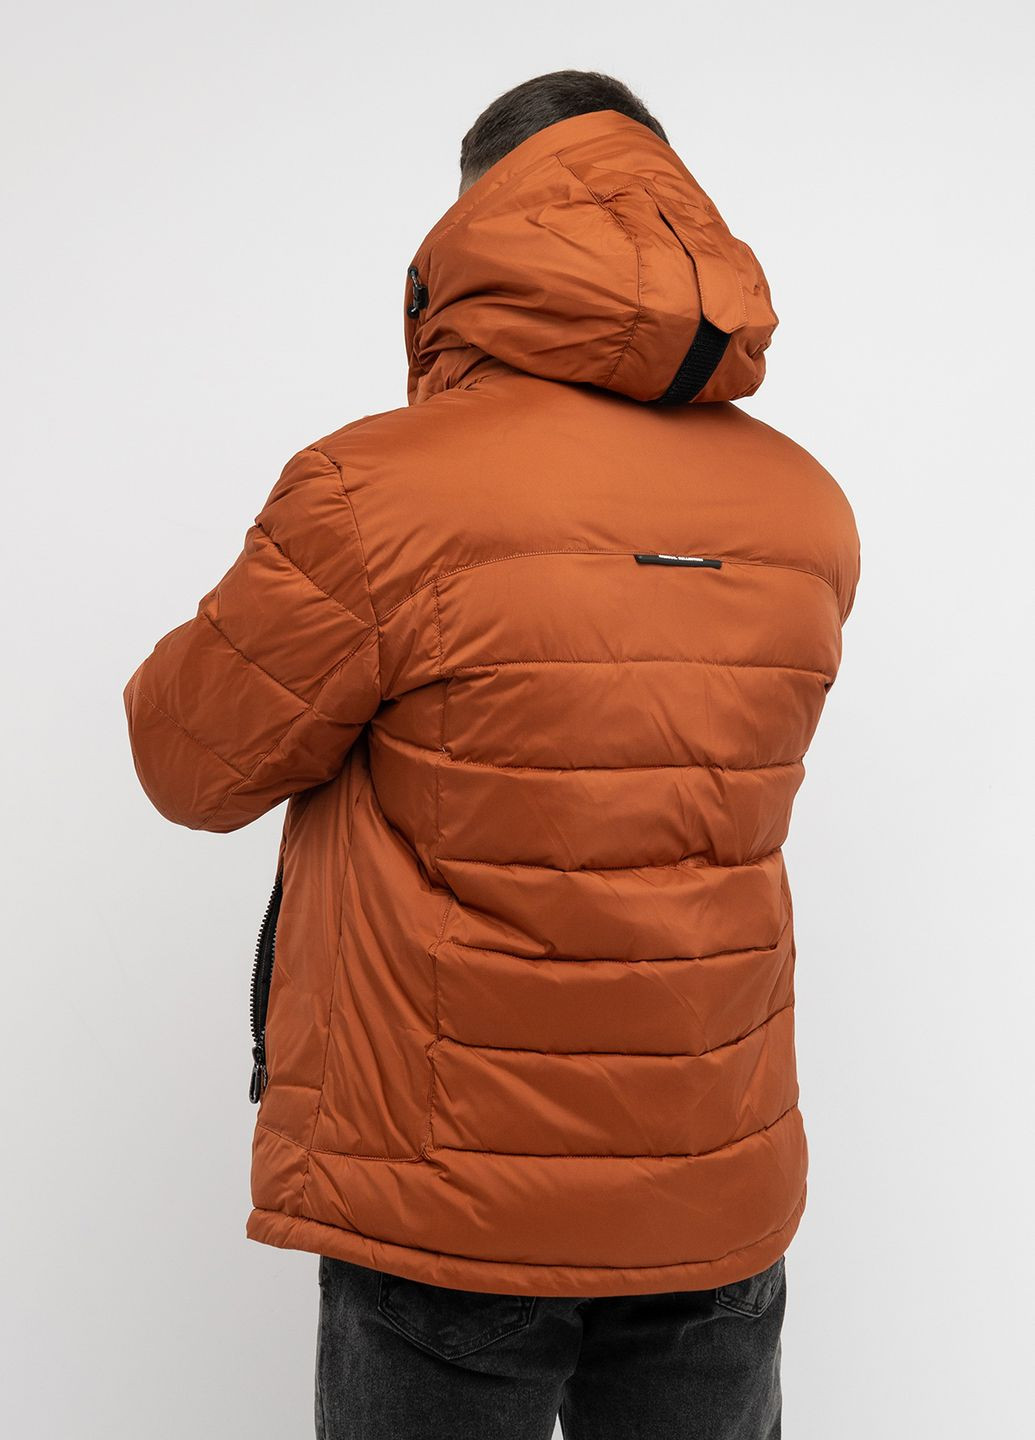 Коричневая зимняя куртка мужская цвет коричневый цб-00220554 Kings Wind